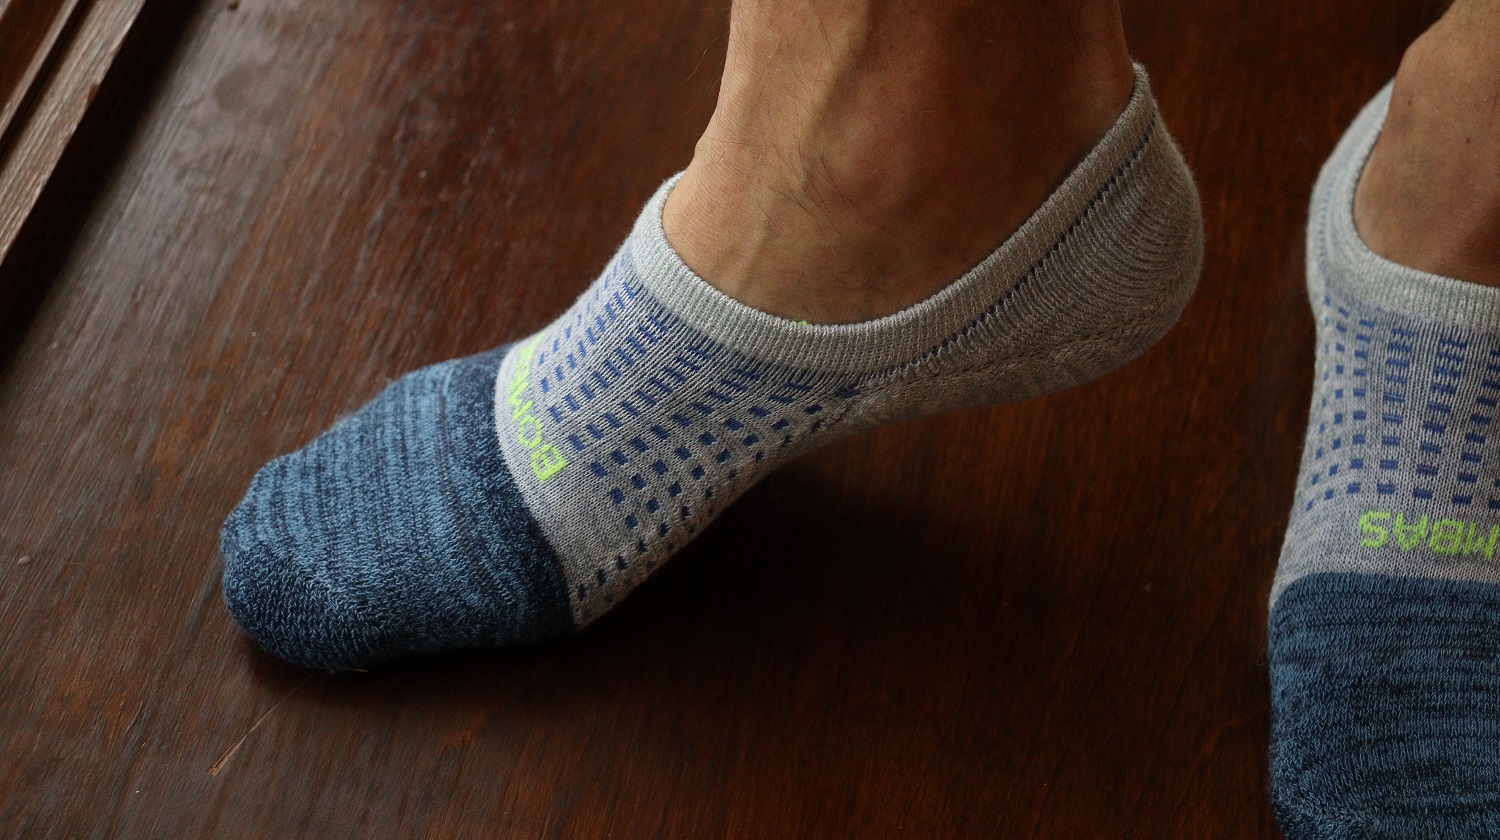 No-Show Liner-Socks 4-Pack for Men